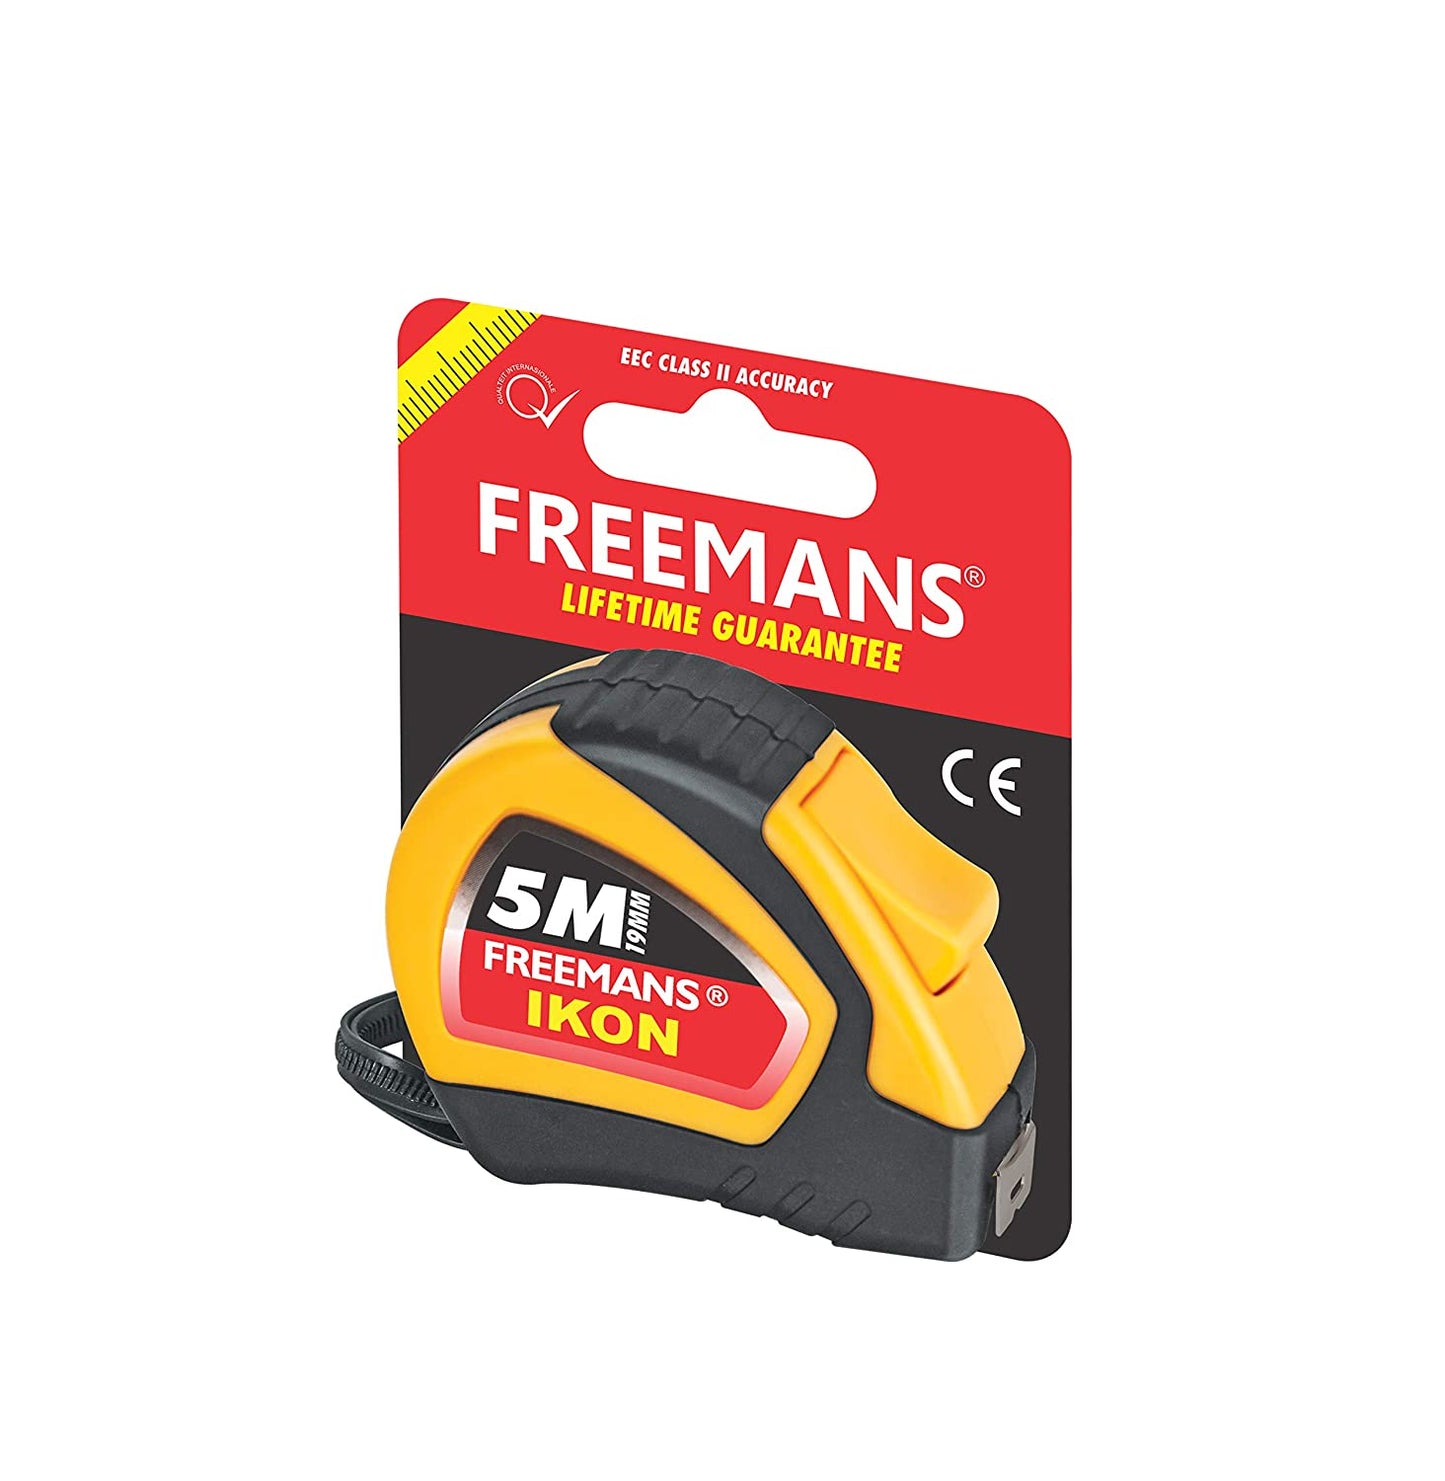 Freemans Ikon 5m:19mm Steel Measuring Tape